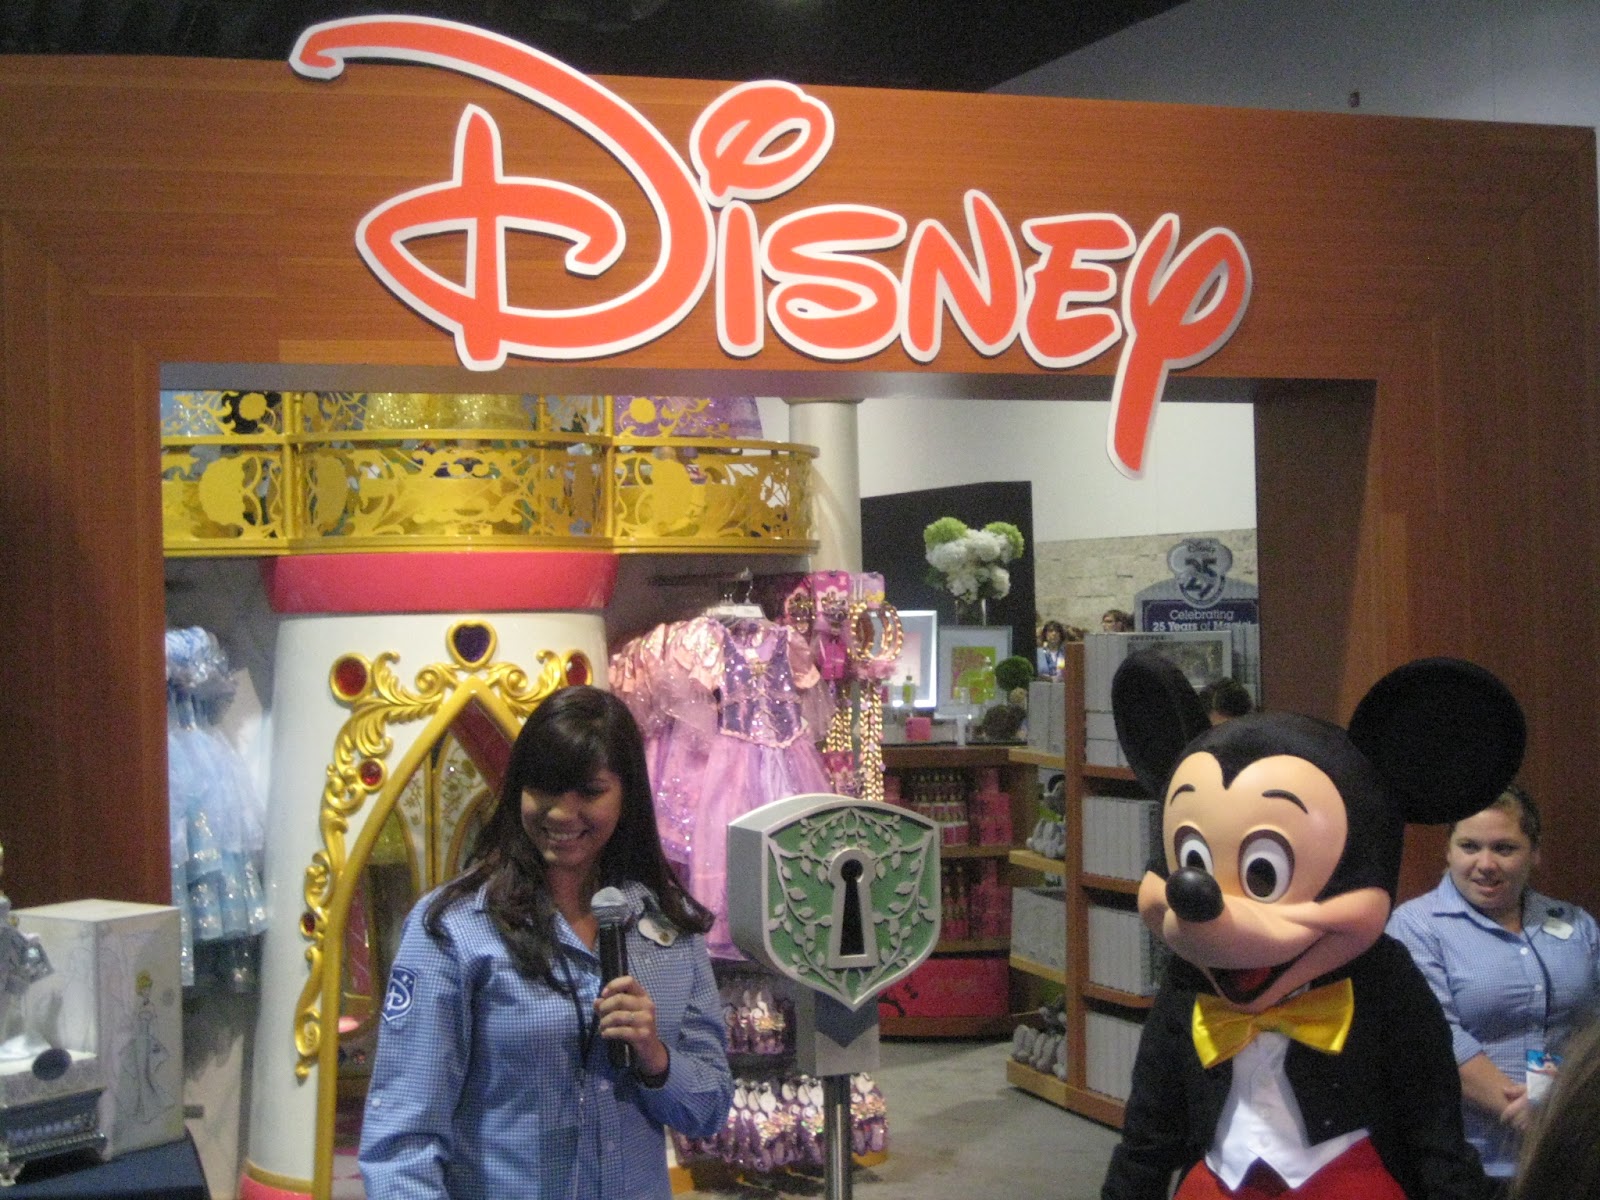 Disney Sisters Where Is The Disney Store? Costa Mesa, CA